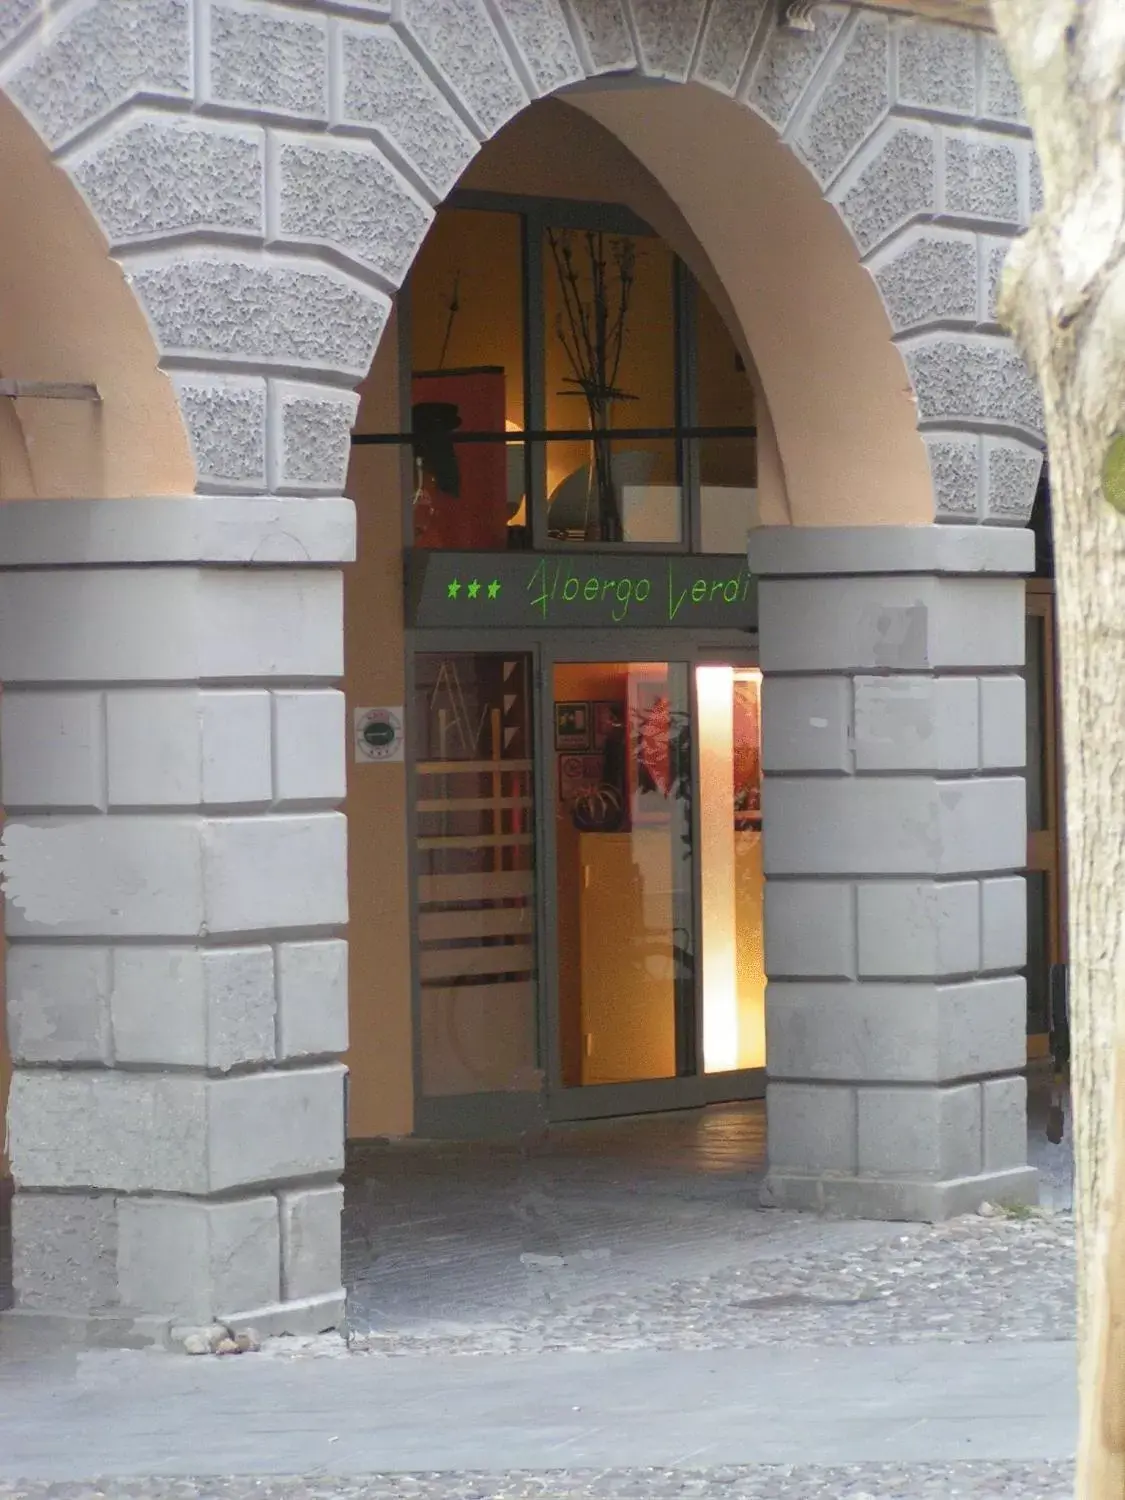 Facade/entrance in Albergo Verdi